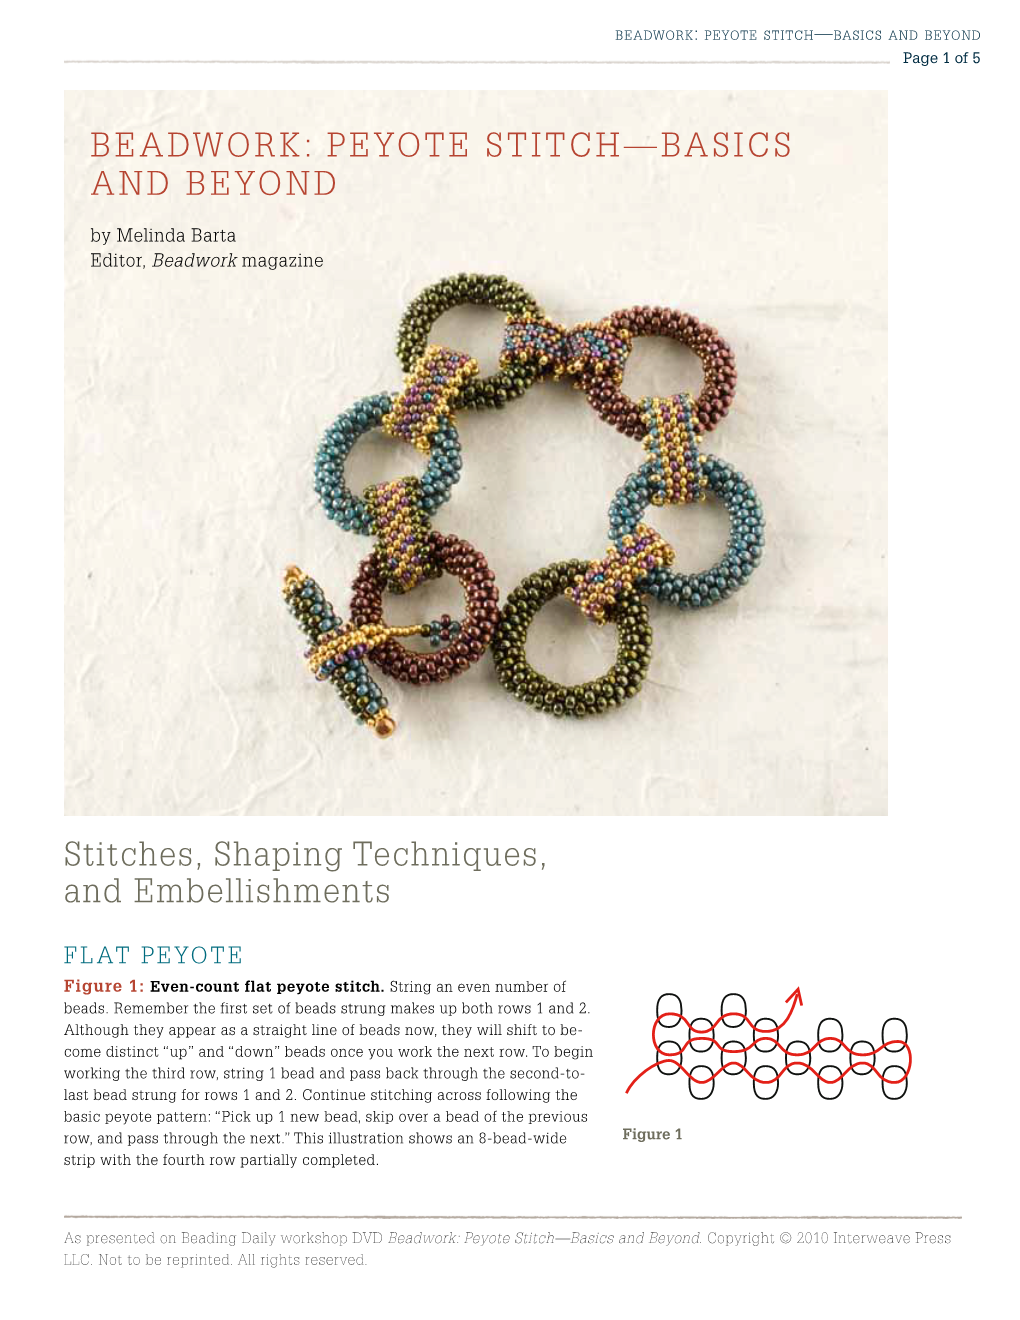 Beadwork: Peyote Stitch—Basics and Beyond Page 1 of 5